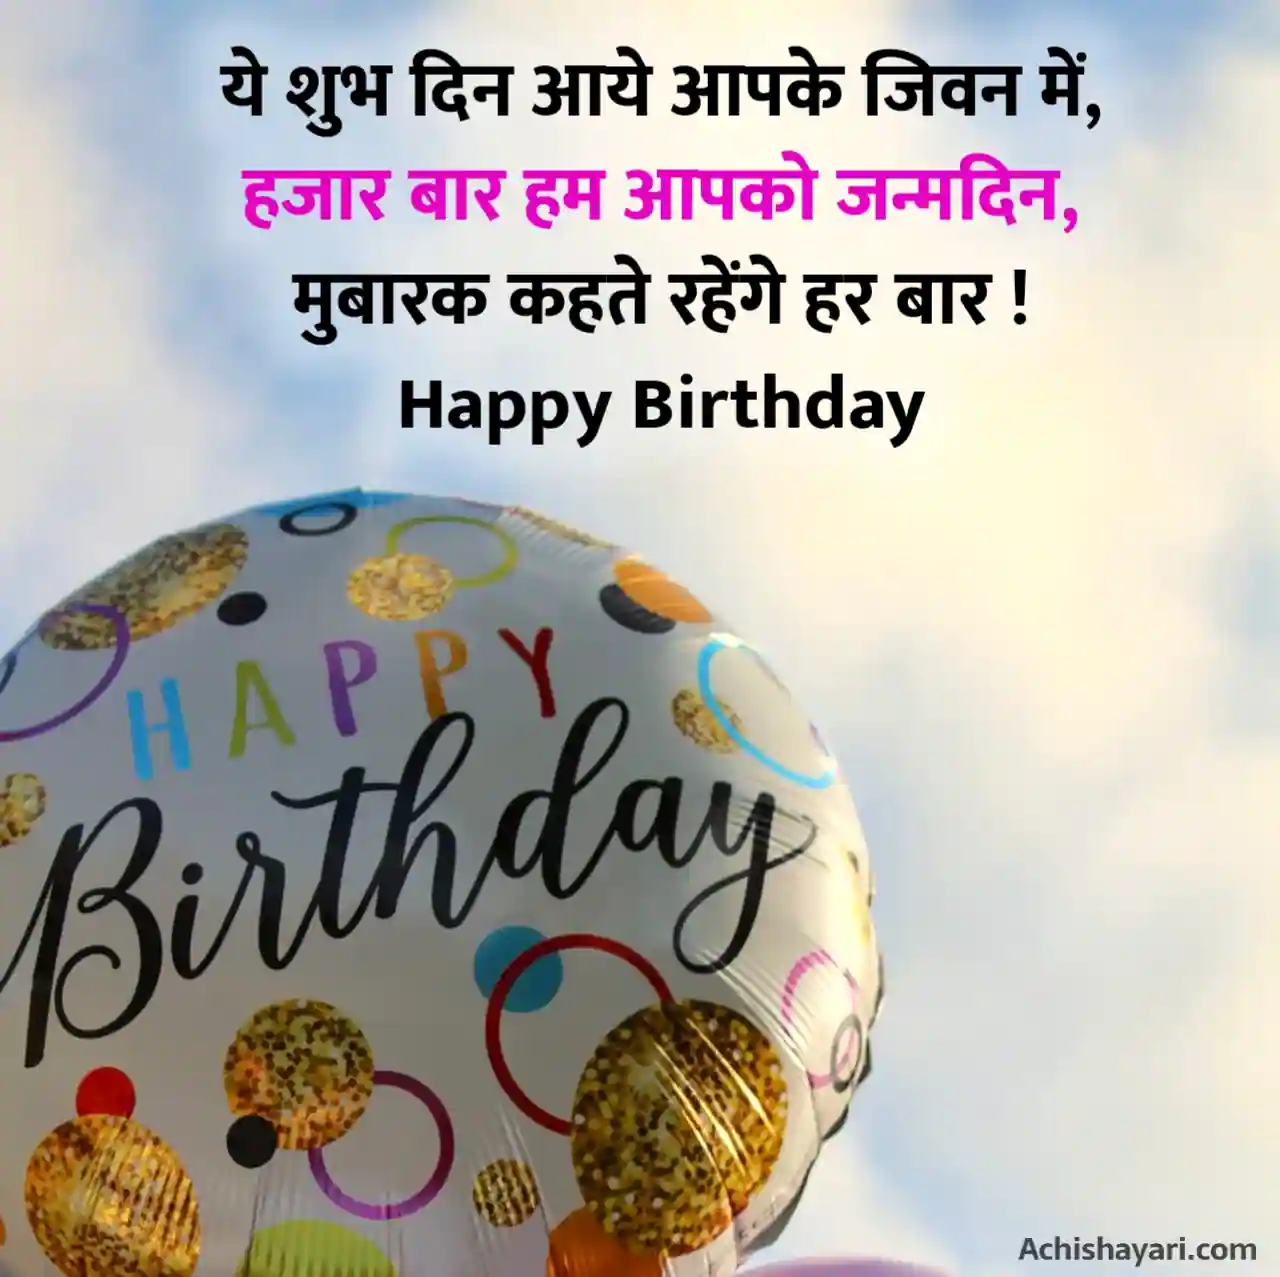 Happy Bithday Wishes Hindi